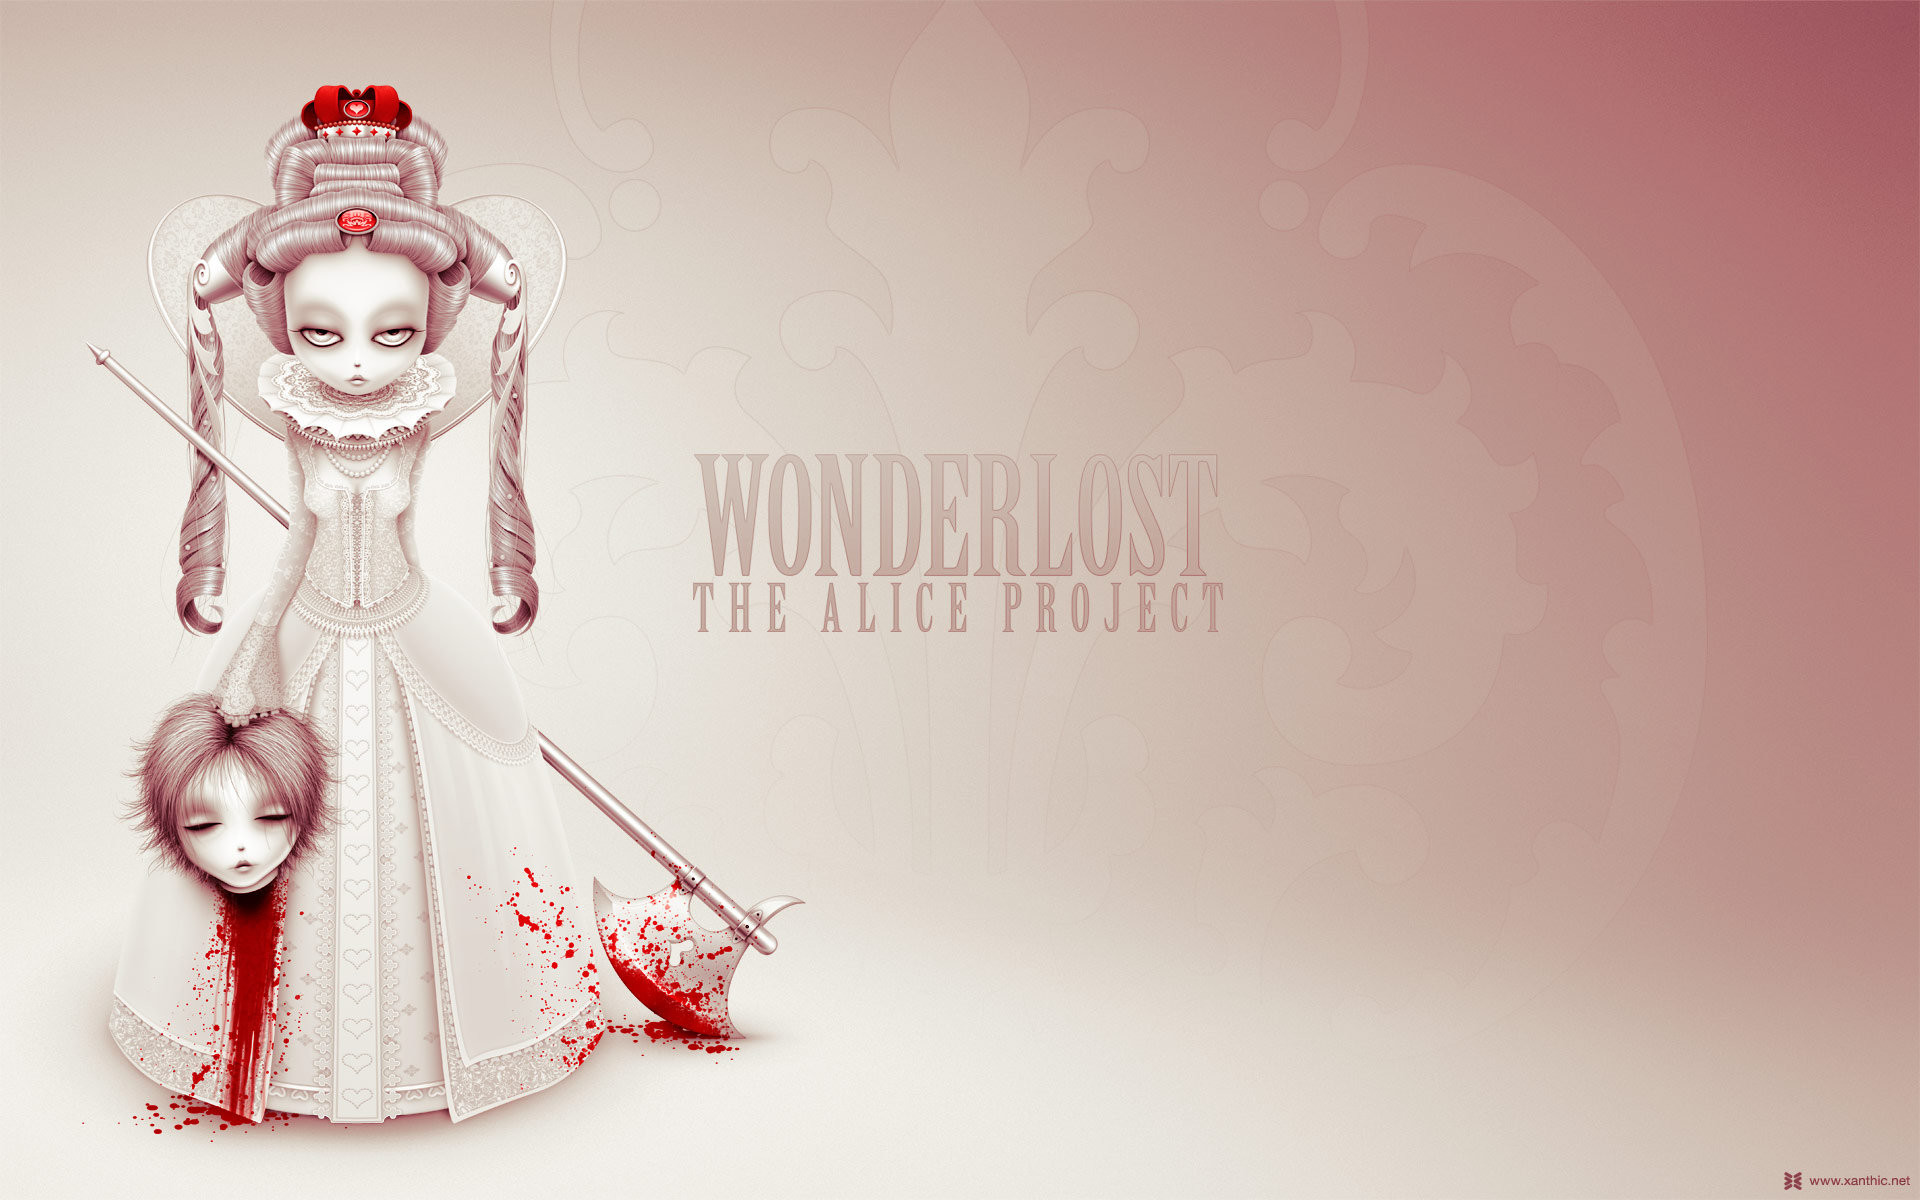 1920x1200 Wonderlost: Queen of Hearts WP by xanthic ...